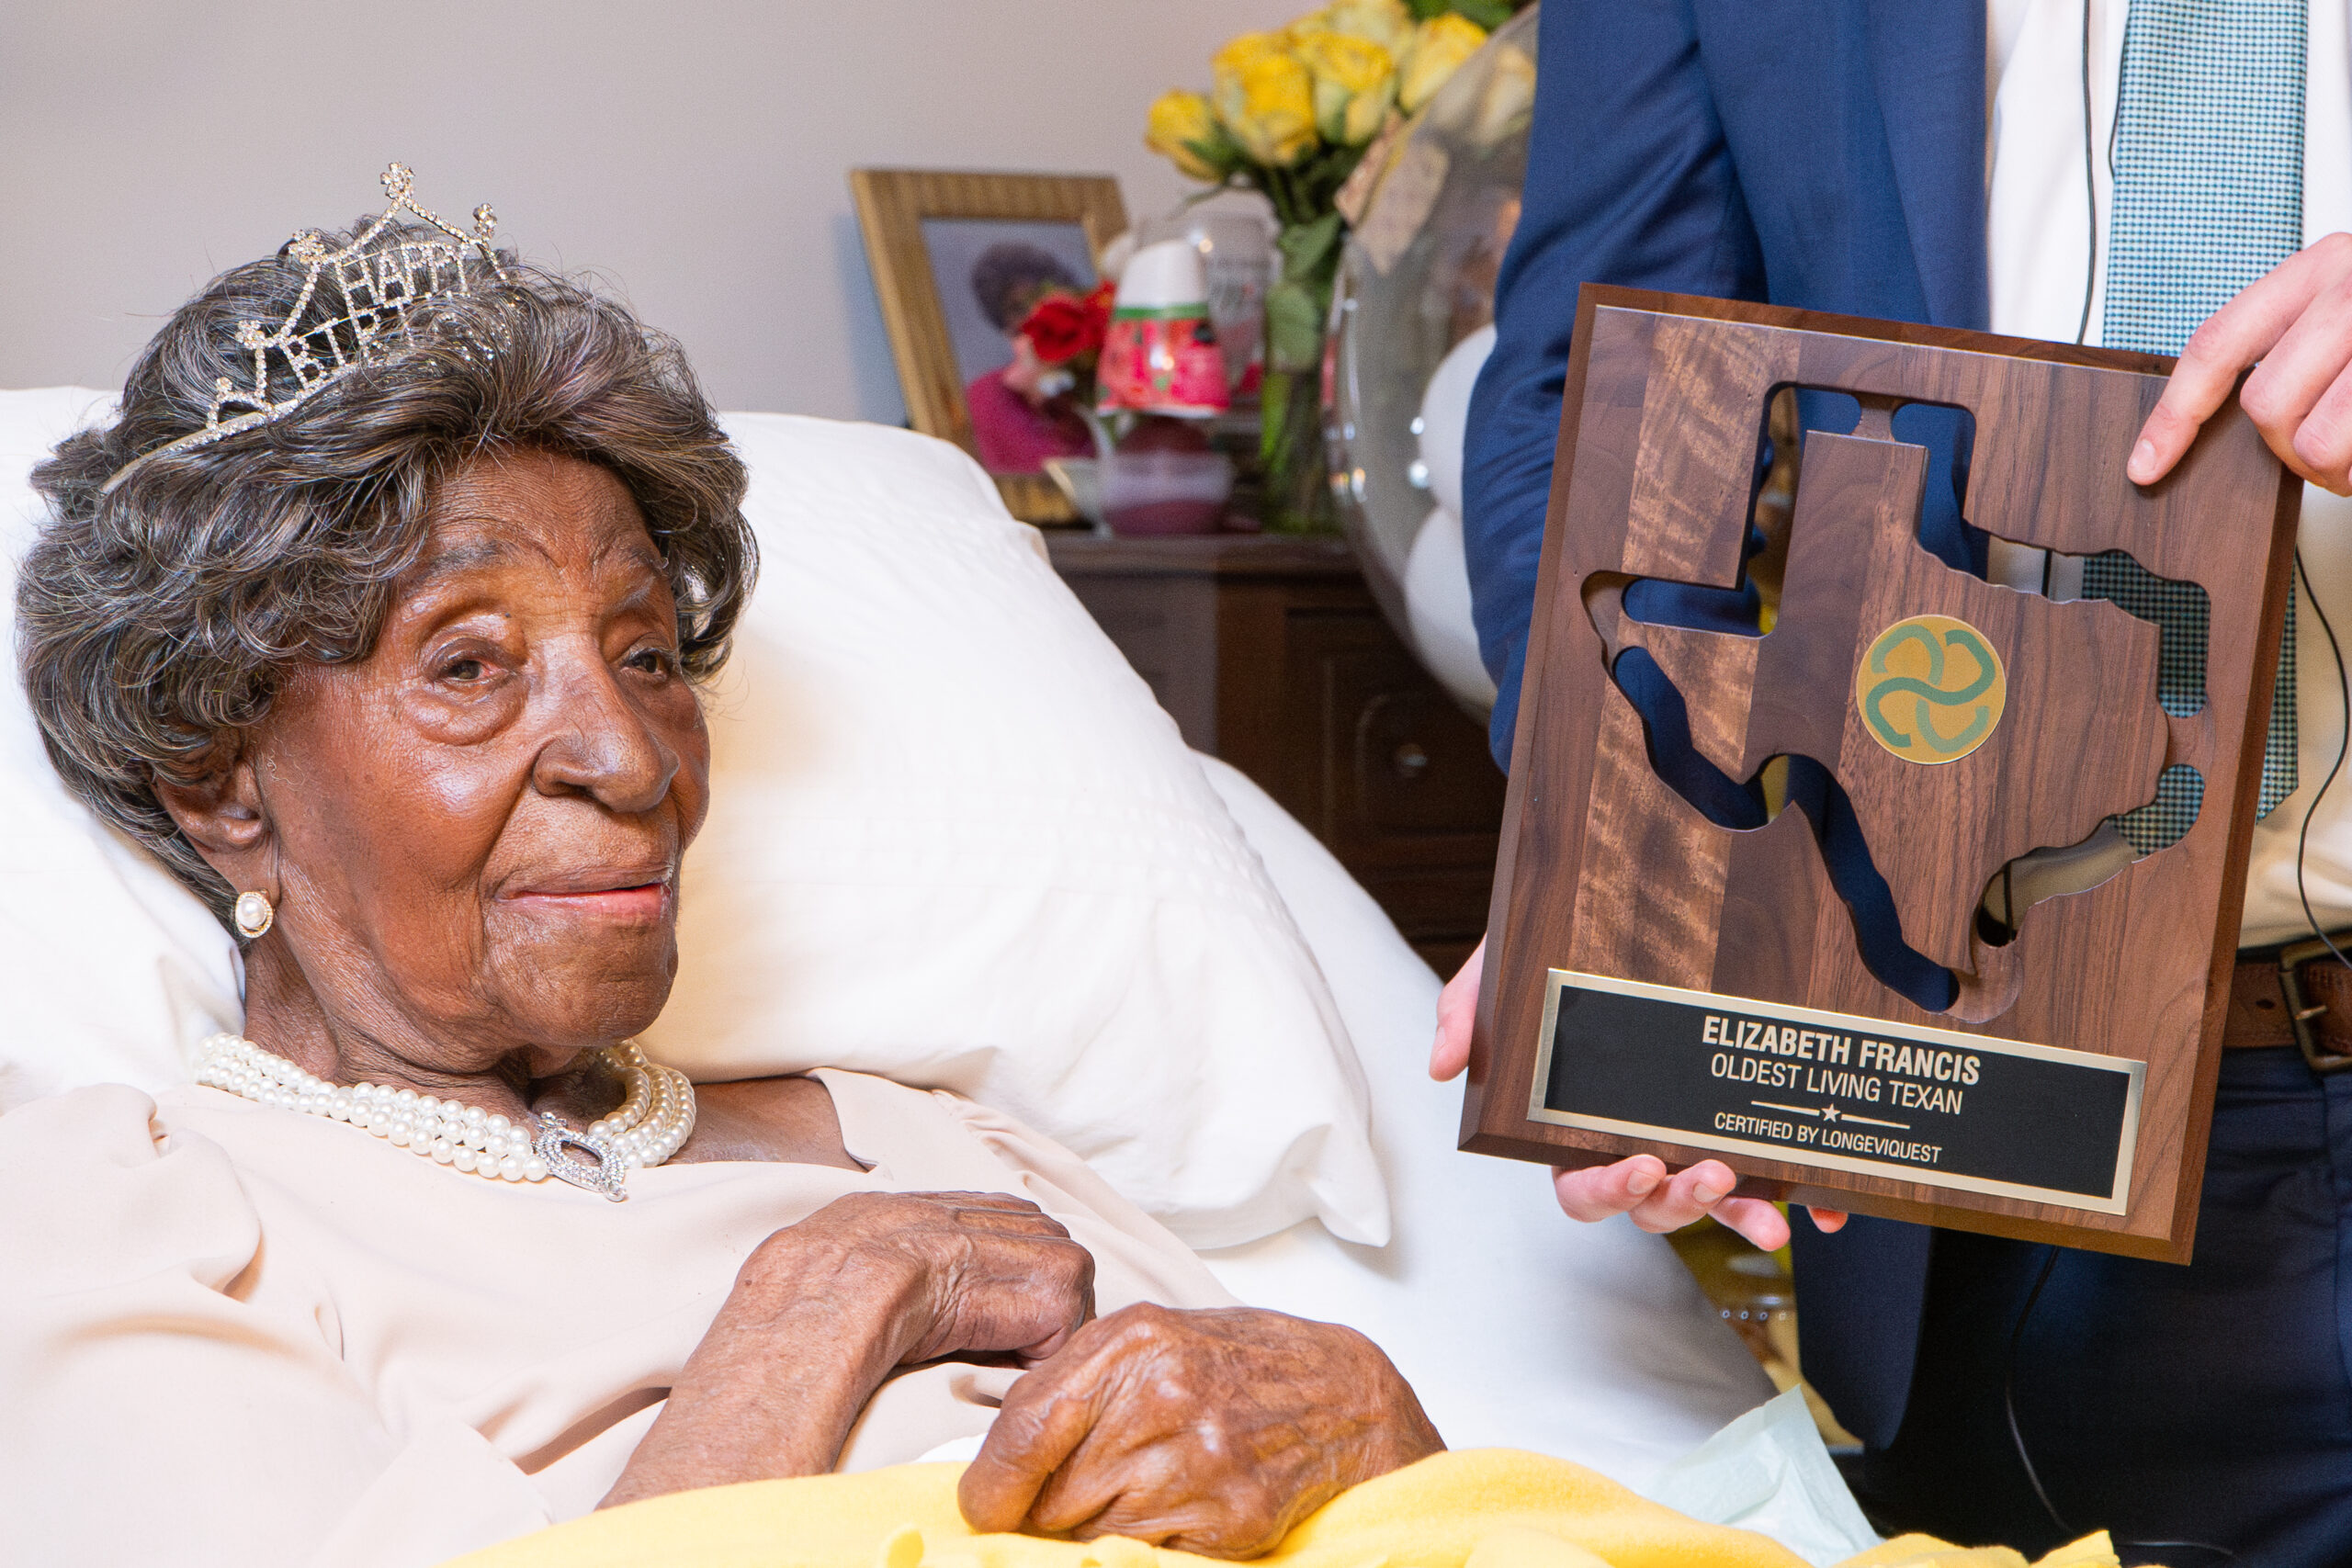 Elizabeth Francis, World’s 7th Oldest Person, Celebrates 114th Birthday